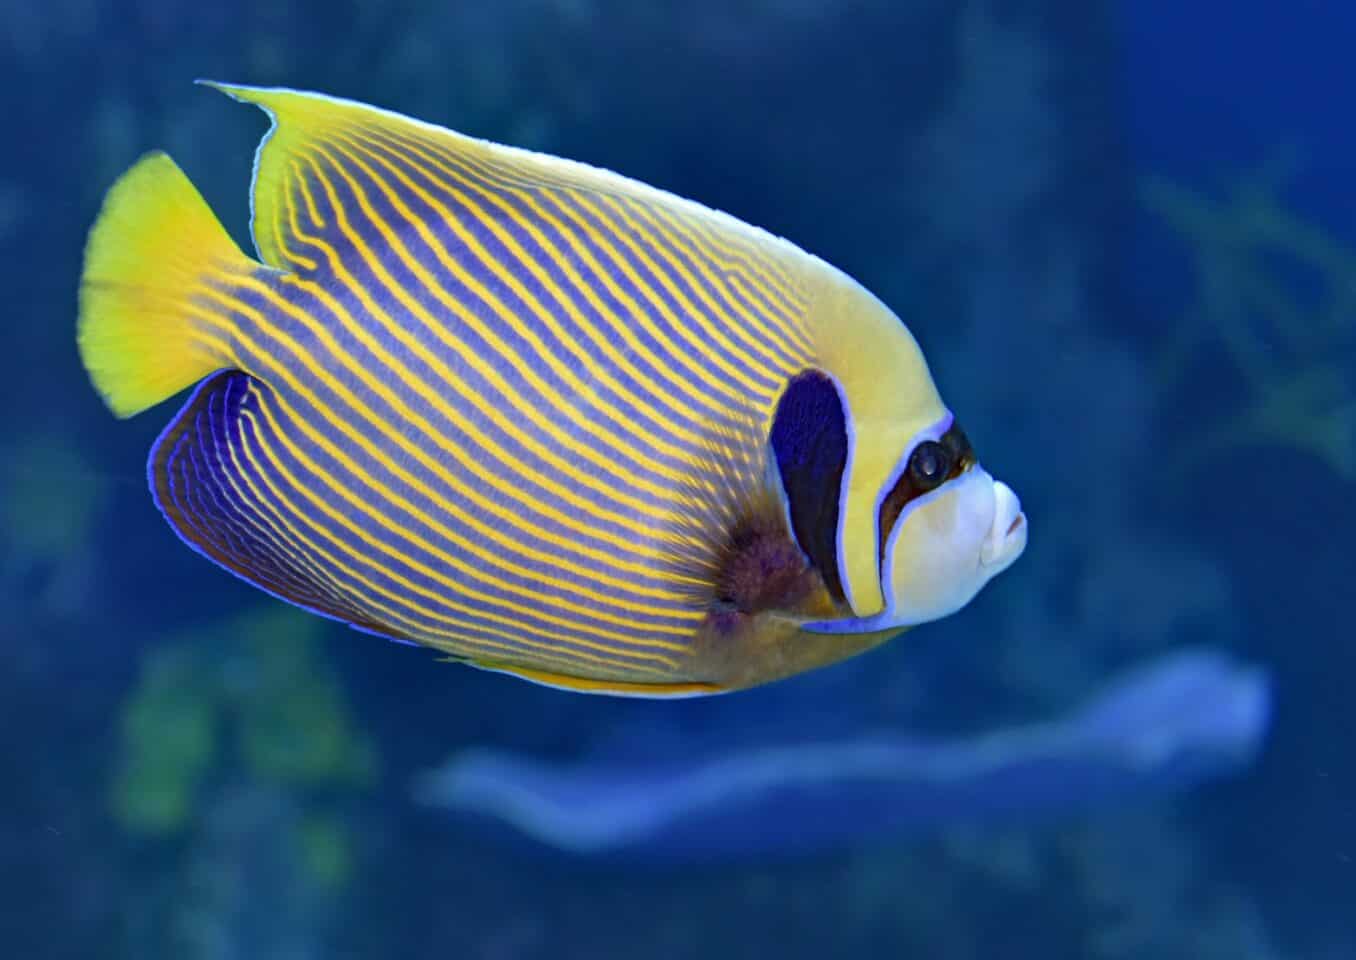 yellow, blue, and black marine emperor angelfish